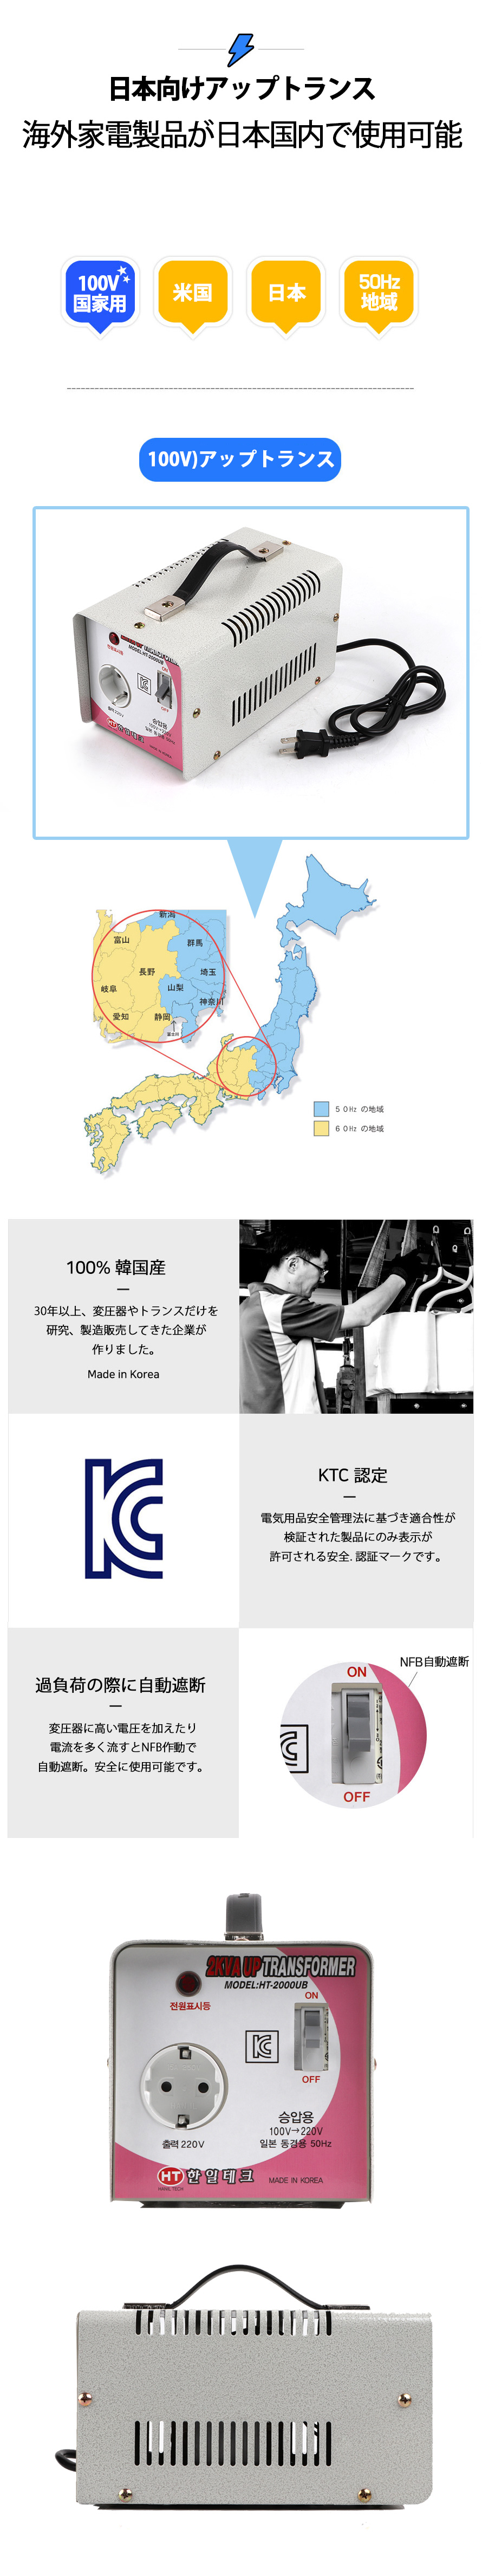 100vアップトランス 変圧器 海外機器日本国内(東日本)で使用可能 :k325:韓国市場 - 通販 - Yahoo!ショッピング